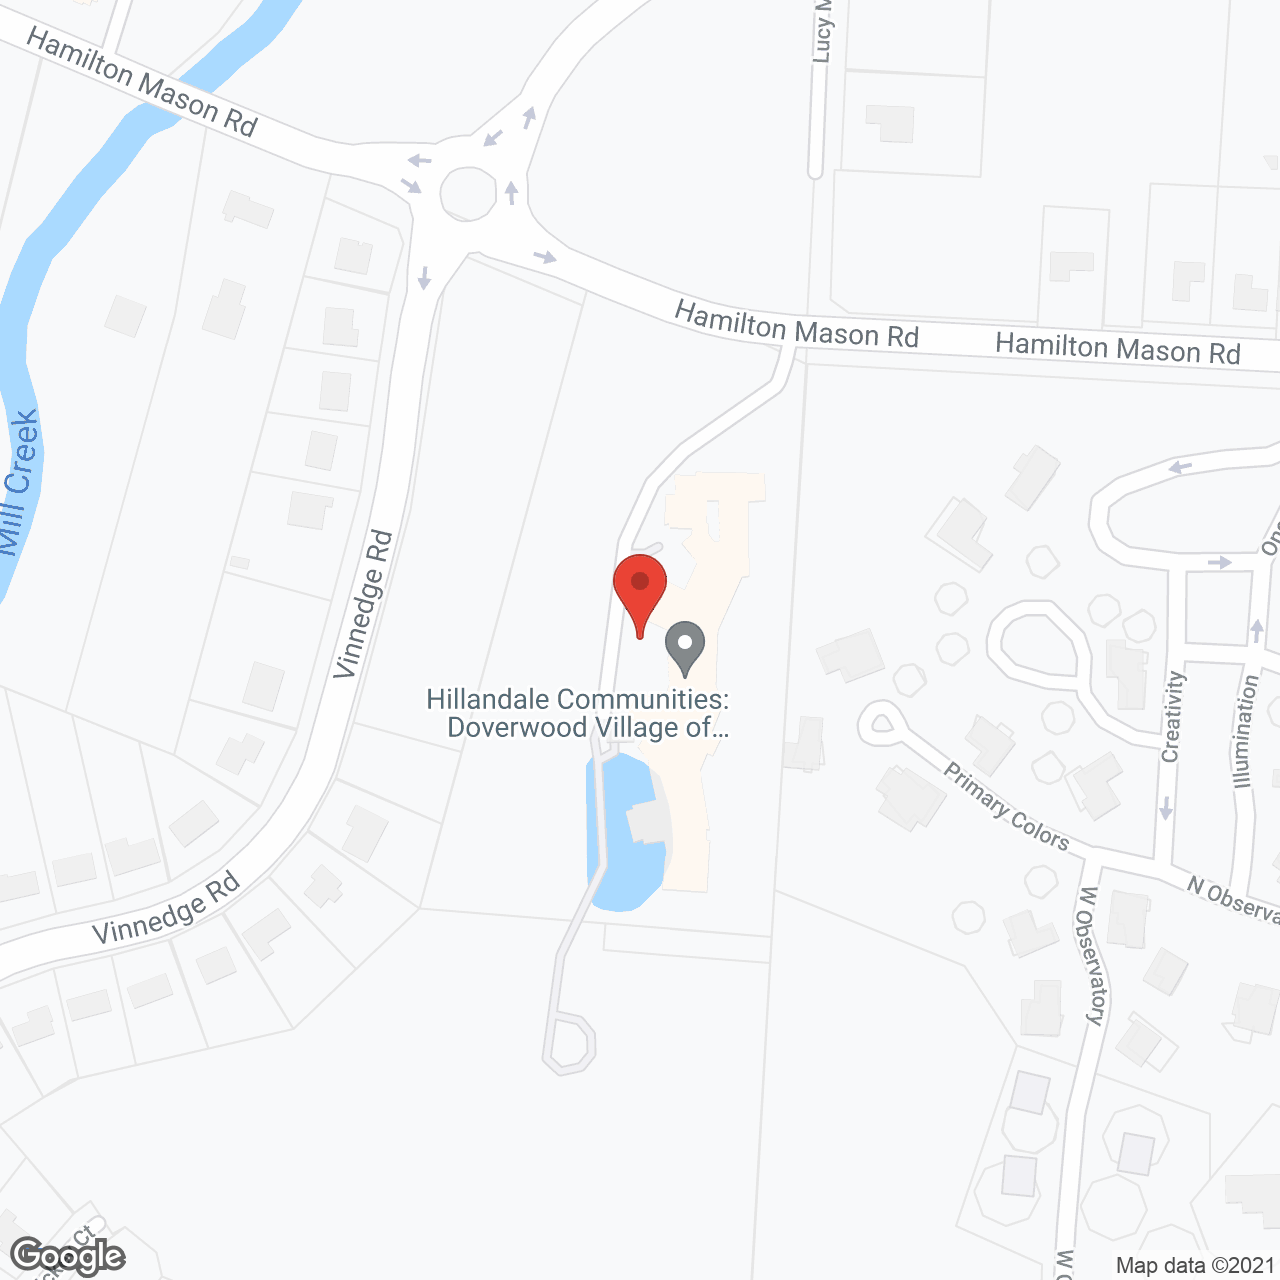 Doverwood Village in google map